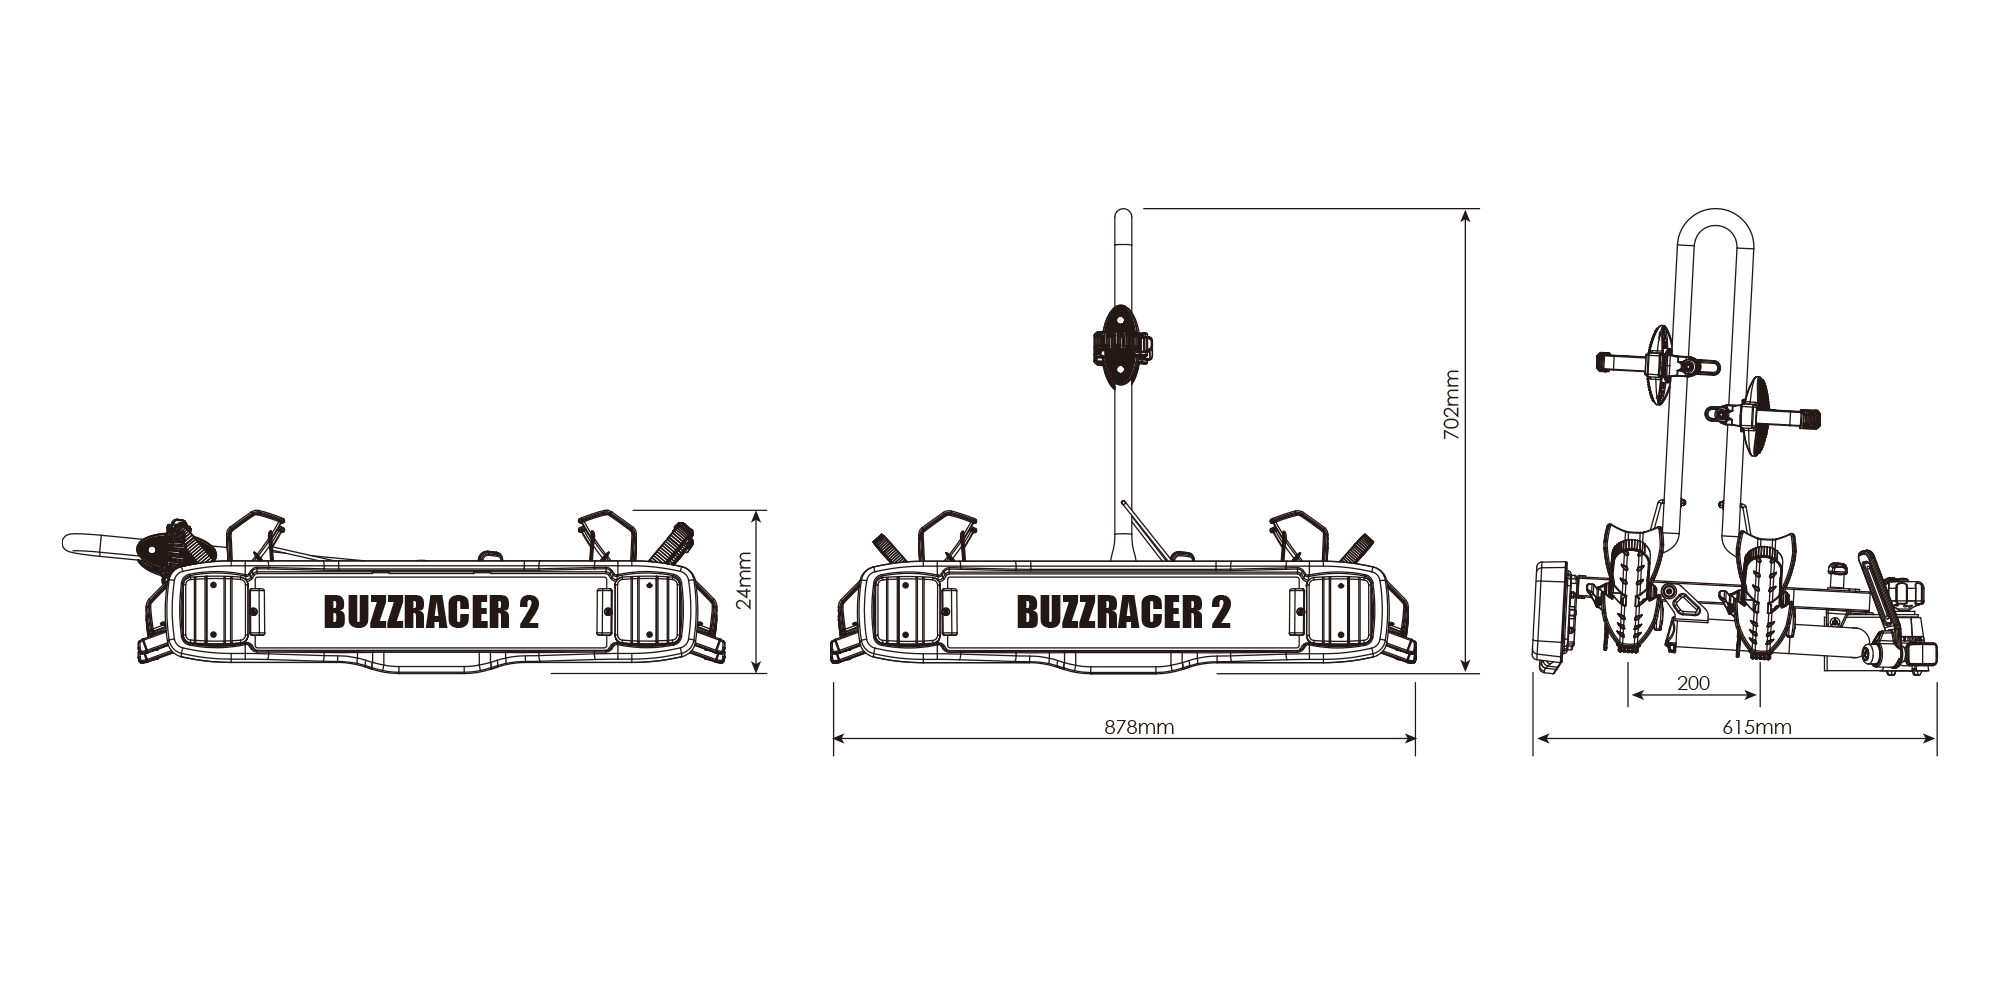 BUZZRACK BuzzRacer 2 technical specifications